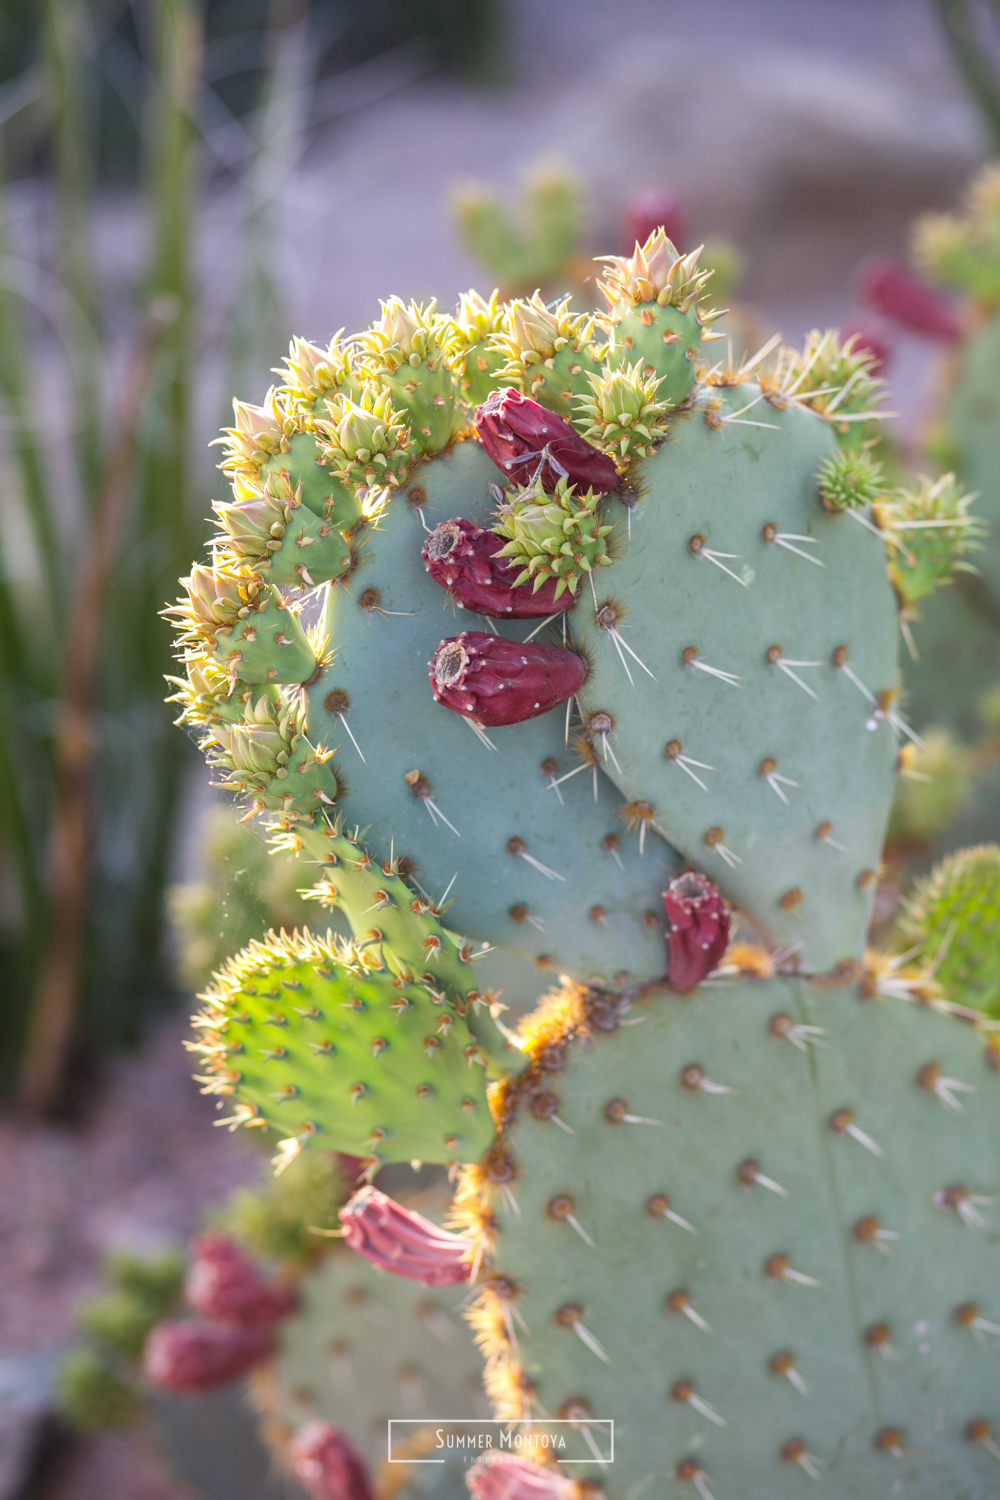  Arizona cactus at the Desert Botanical Gardens 